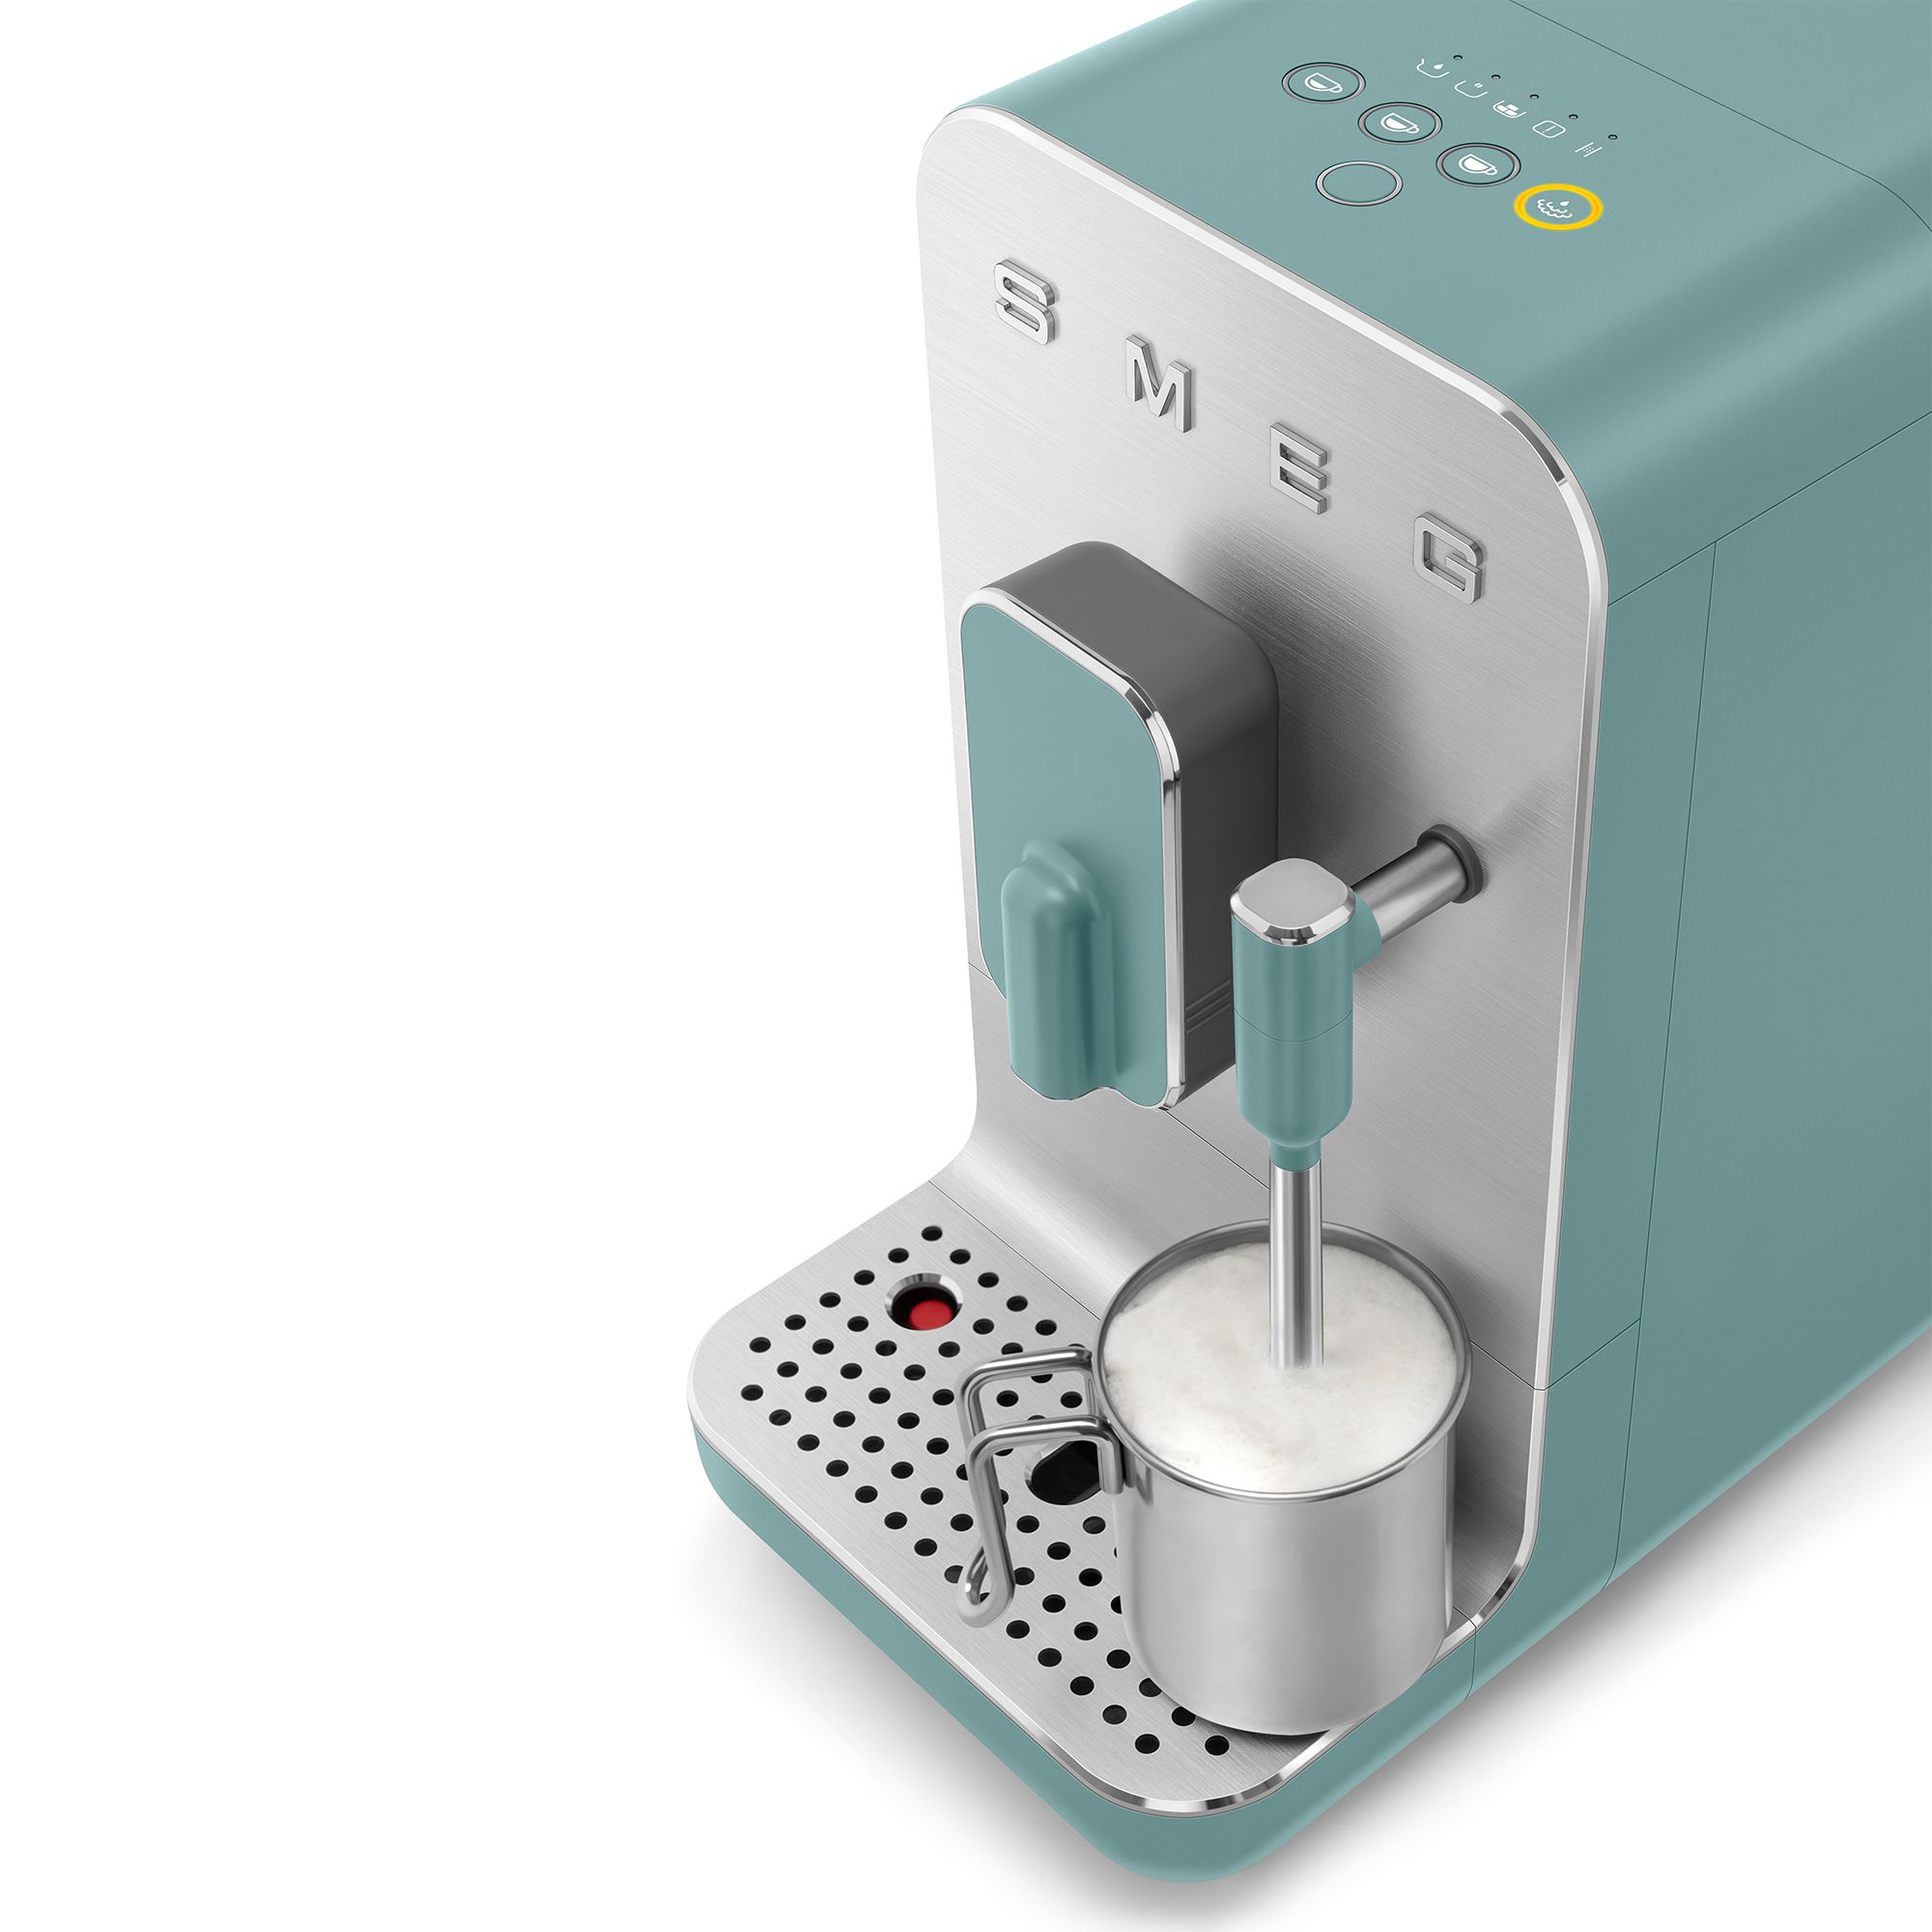 The style line - machine Smeg 50 years - design ° coffee